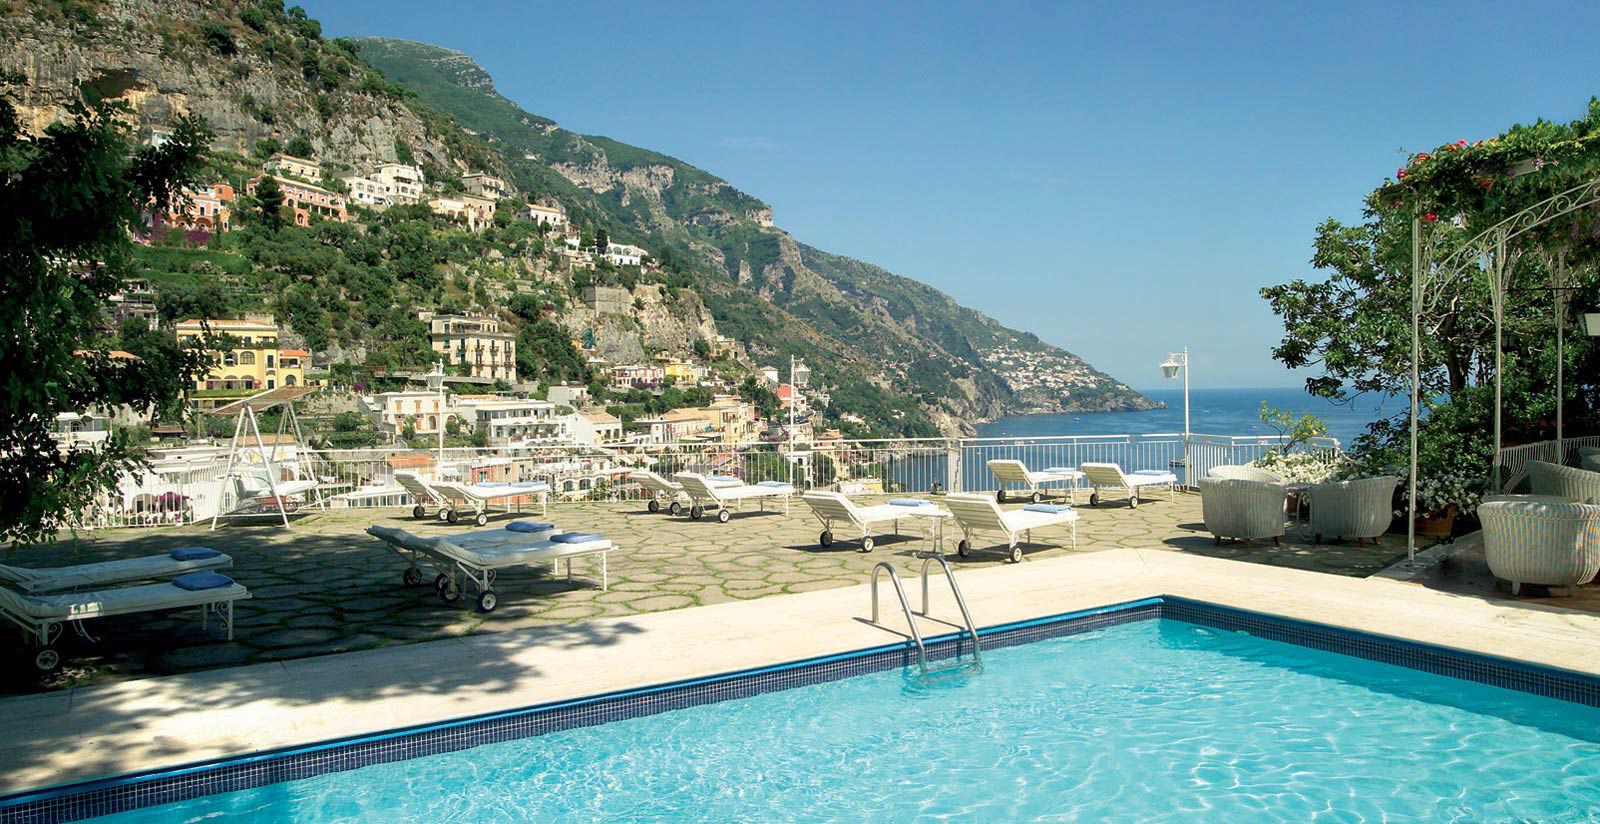 Your private pool in Positano 3